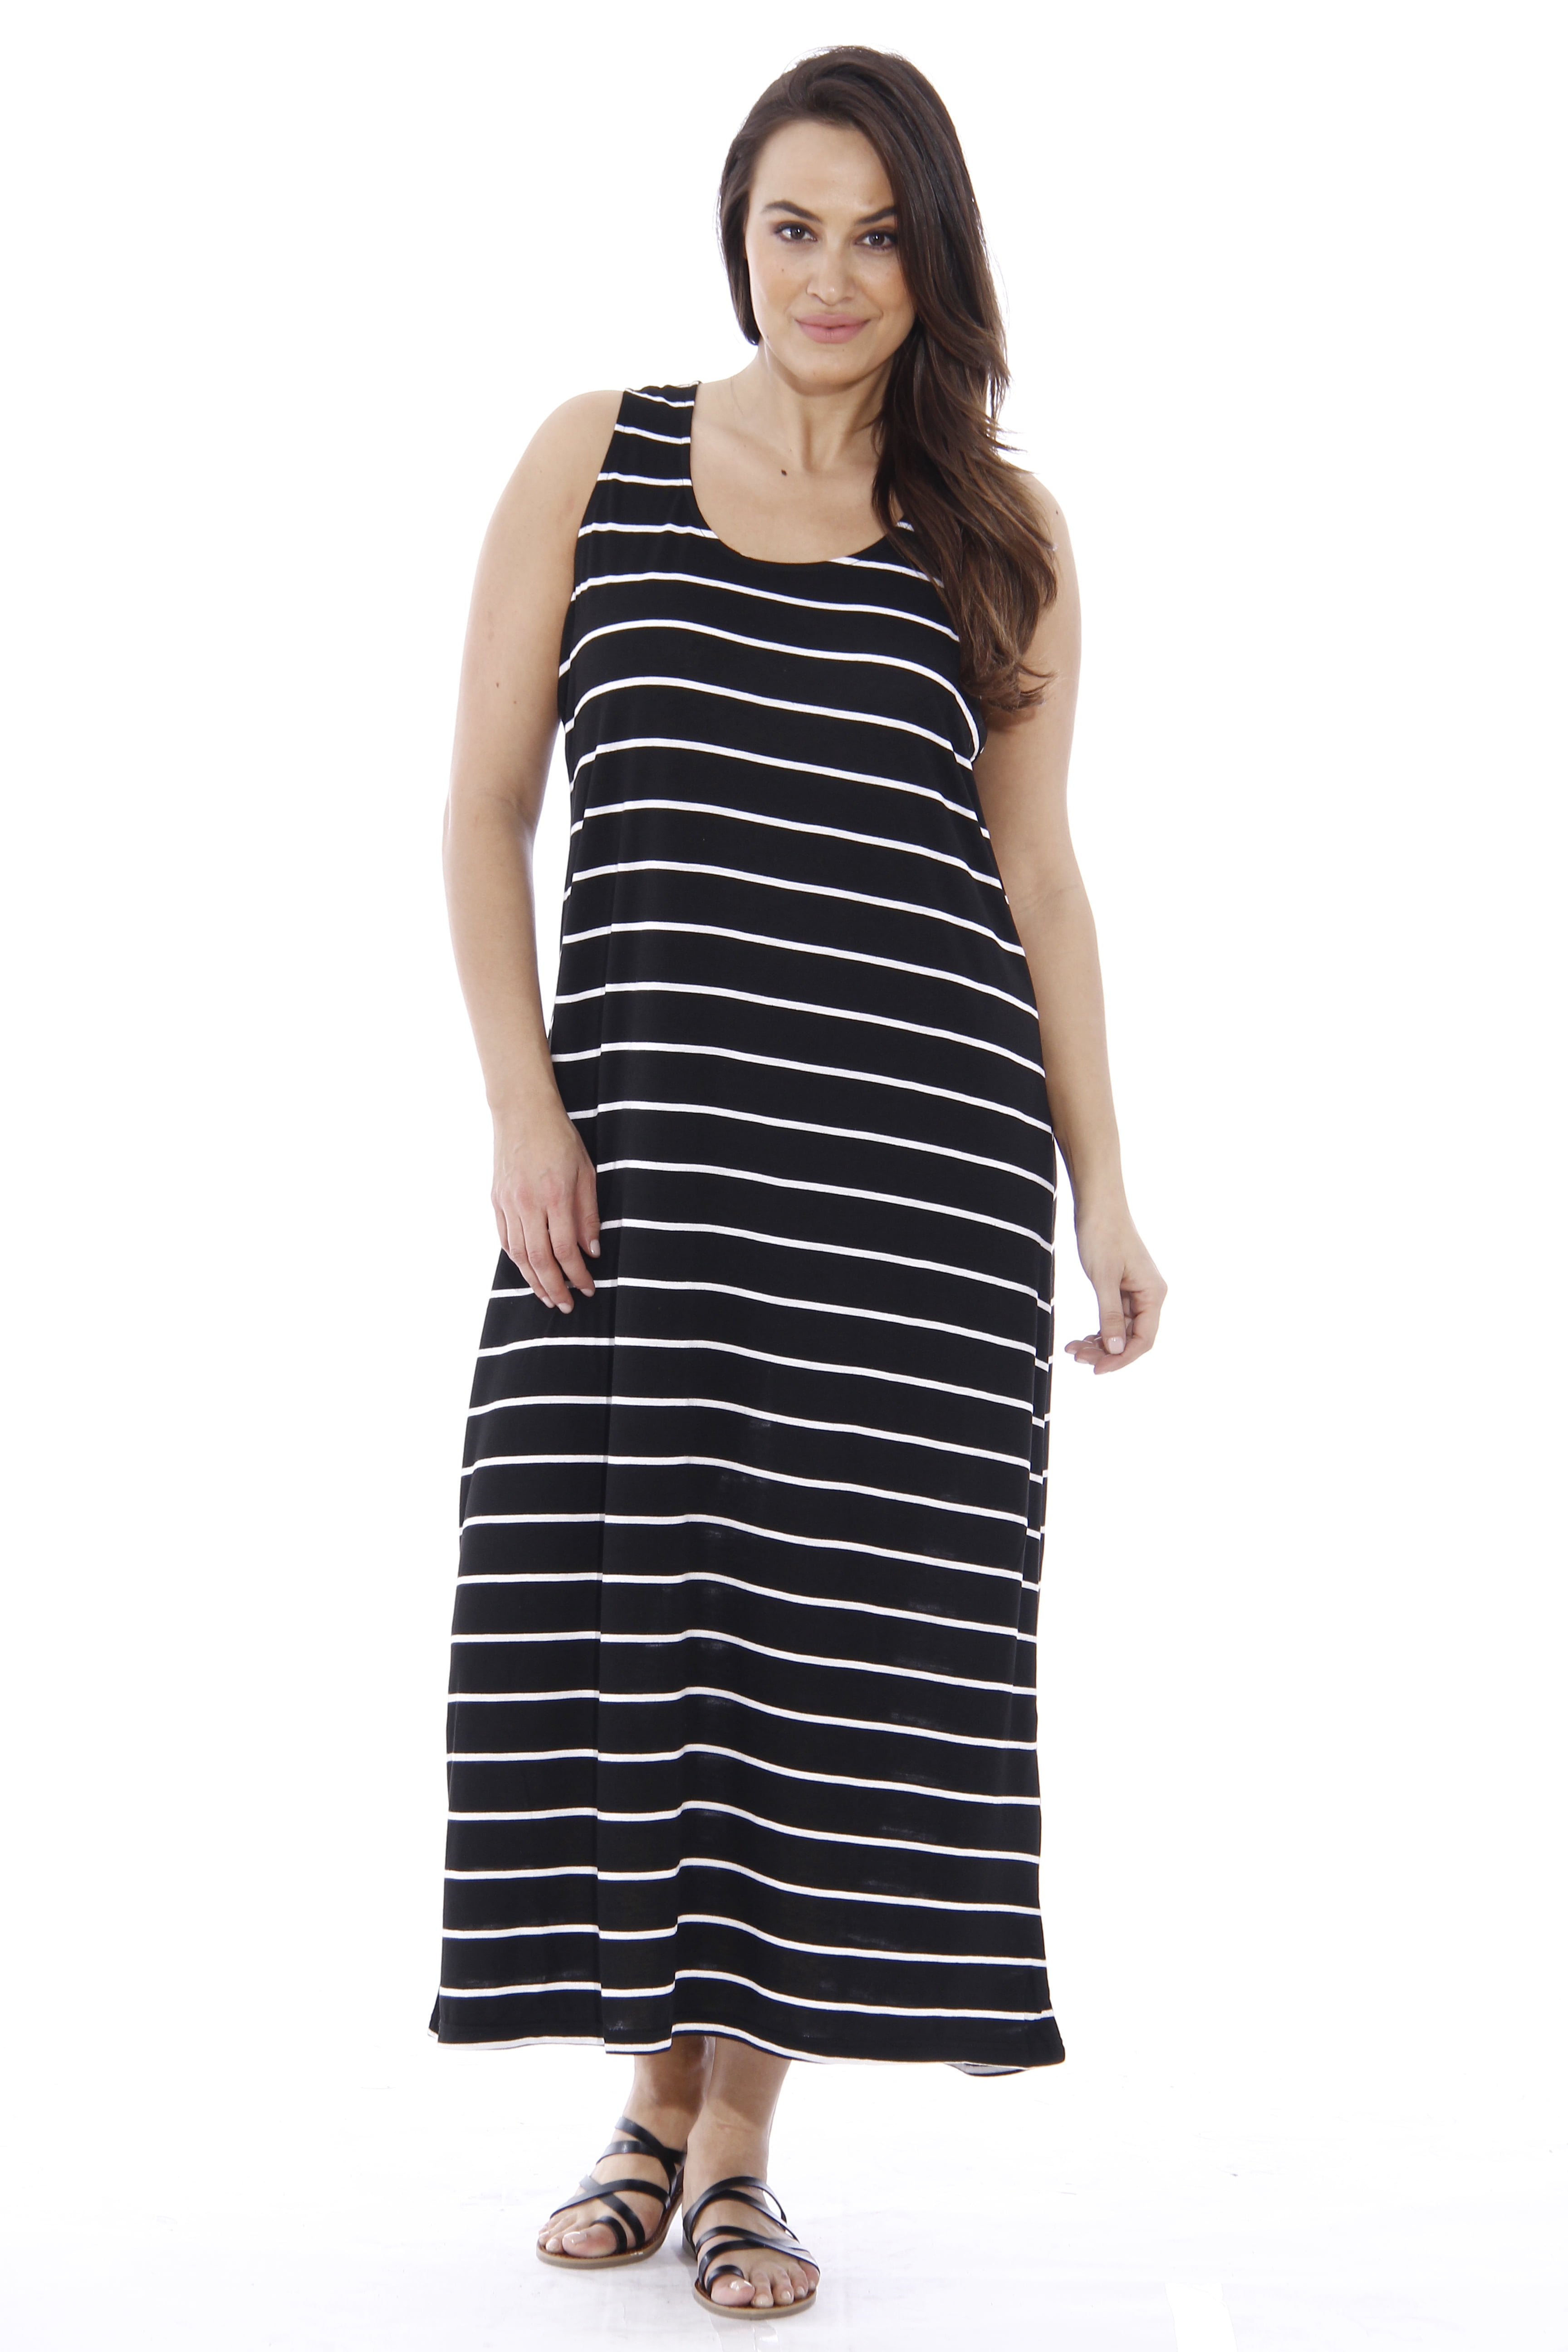 Just Love - Plus Size Summer Dresses / Maxi Dress (Black / White, 1X ...